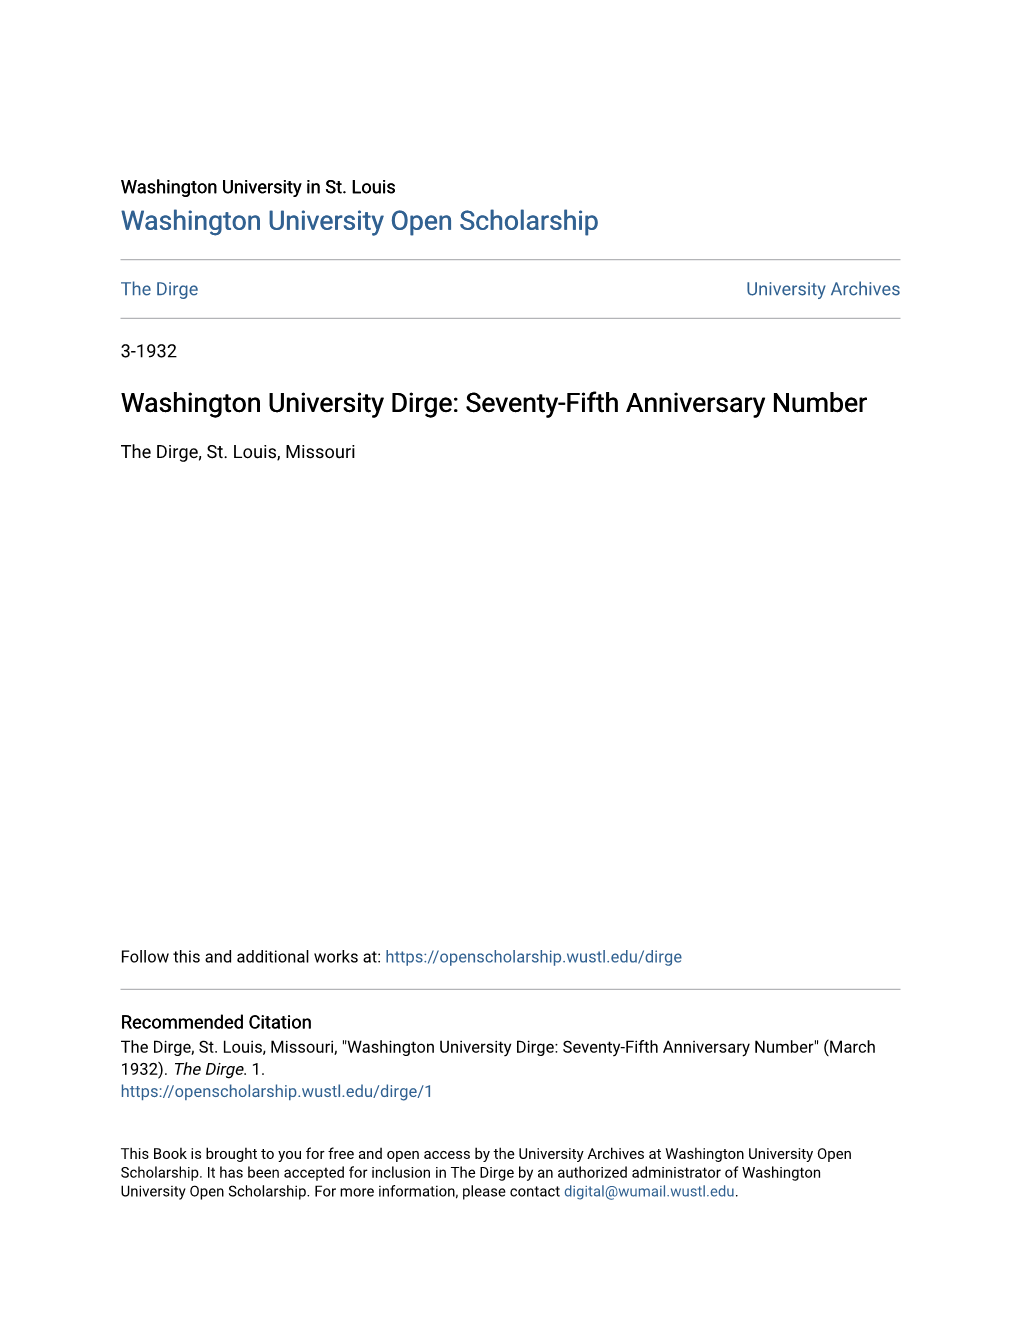 Washington University Dirge: Seventy-Fifth Anniversary Number